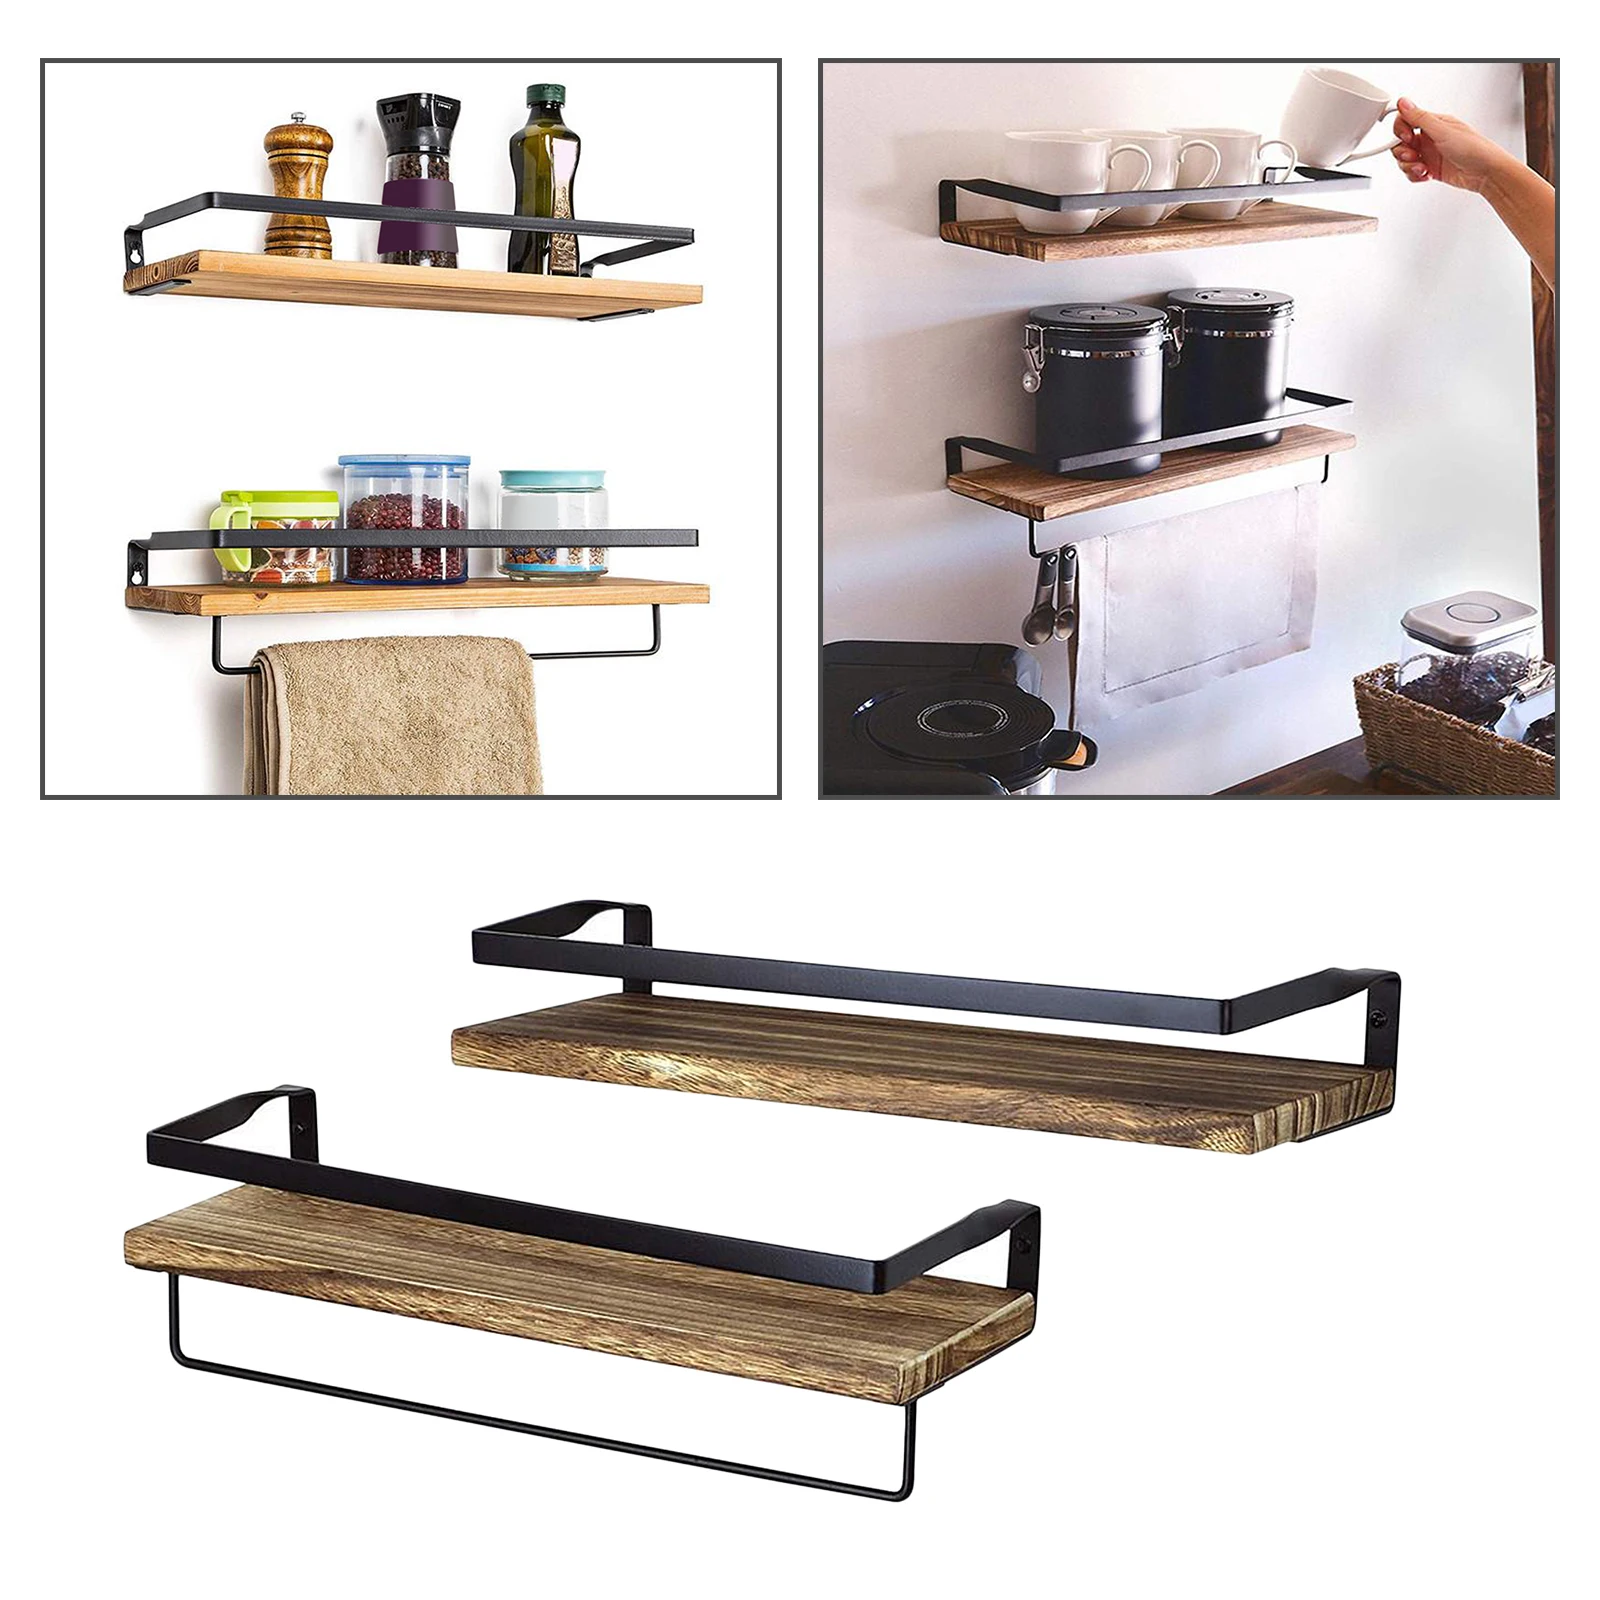 Wood Floating Shelves, Wall Mounted Bathroom Shelf, Rustic Storage Shelves with Removable Towel Holder for Kitchen, Living Room